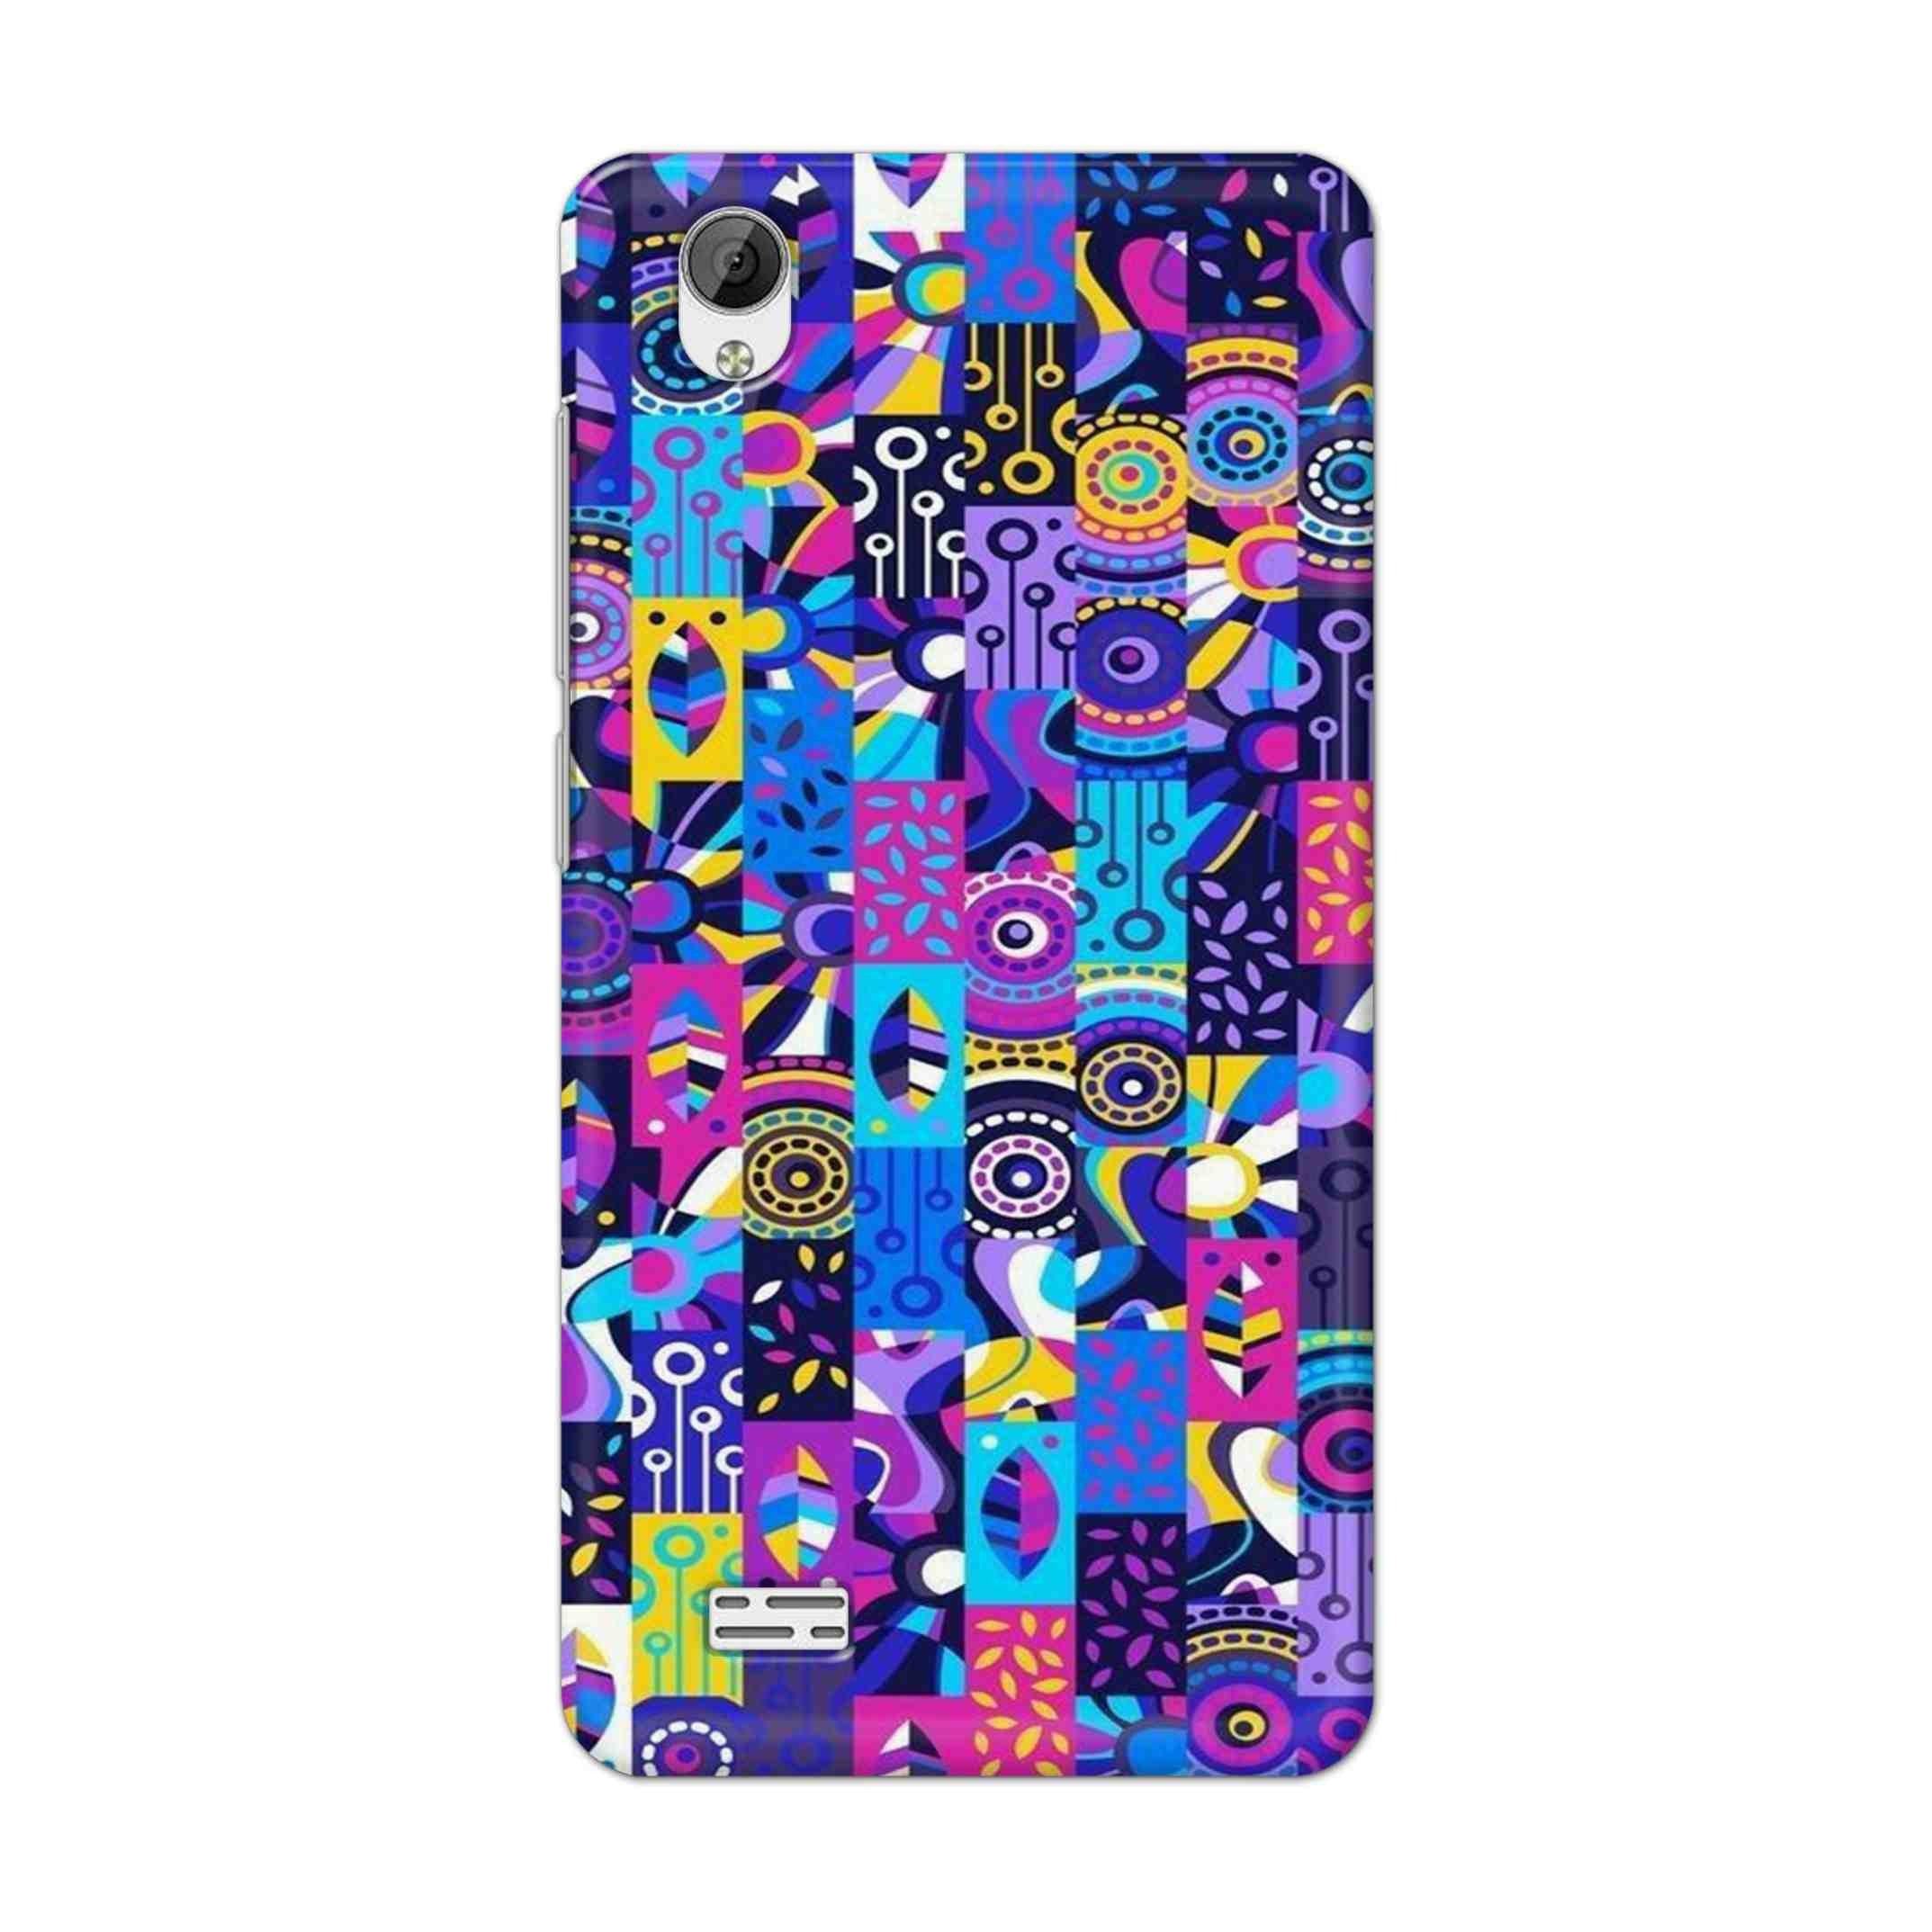 Buy Rainbow Art Hard Back Mobile Phone Case Cover For Vivo Y31 Online